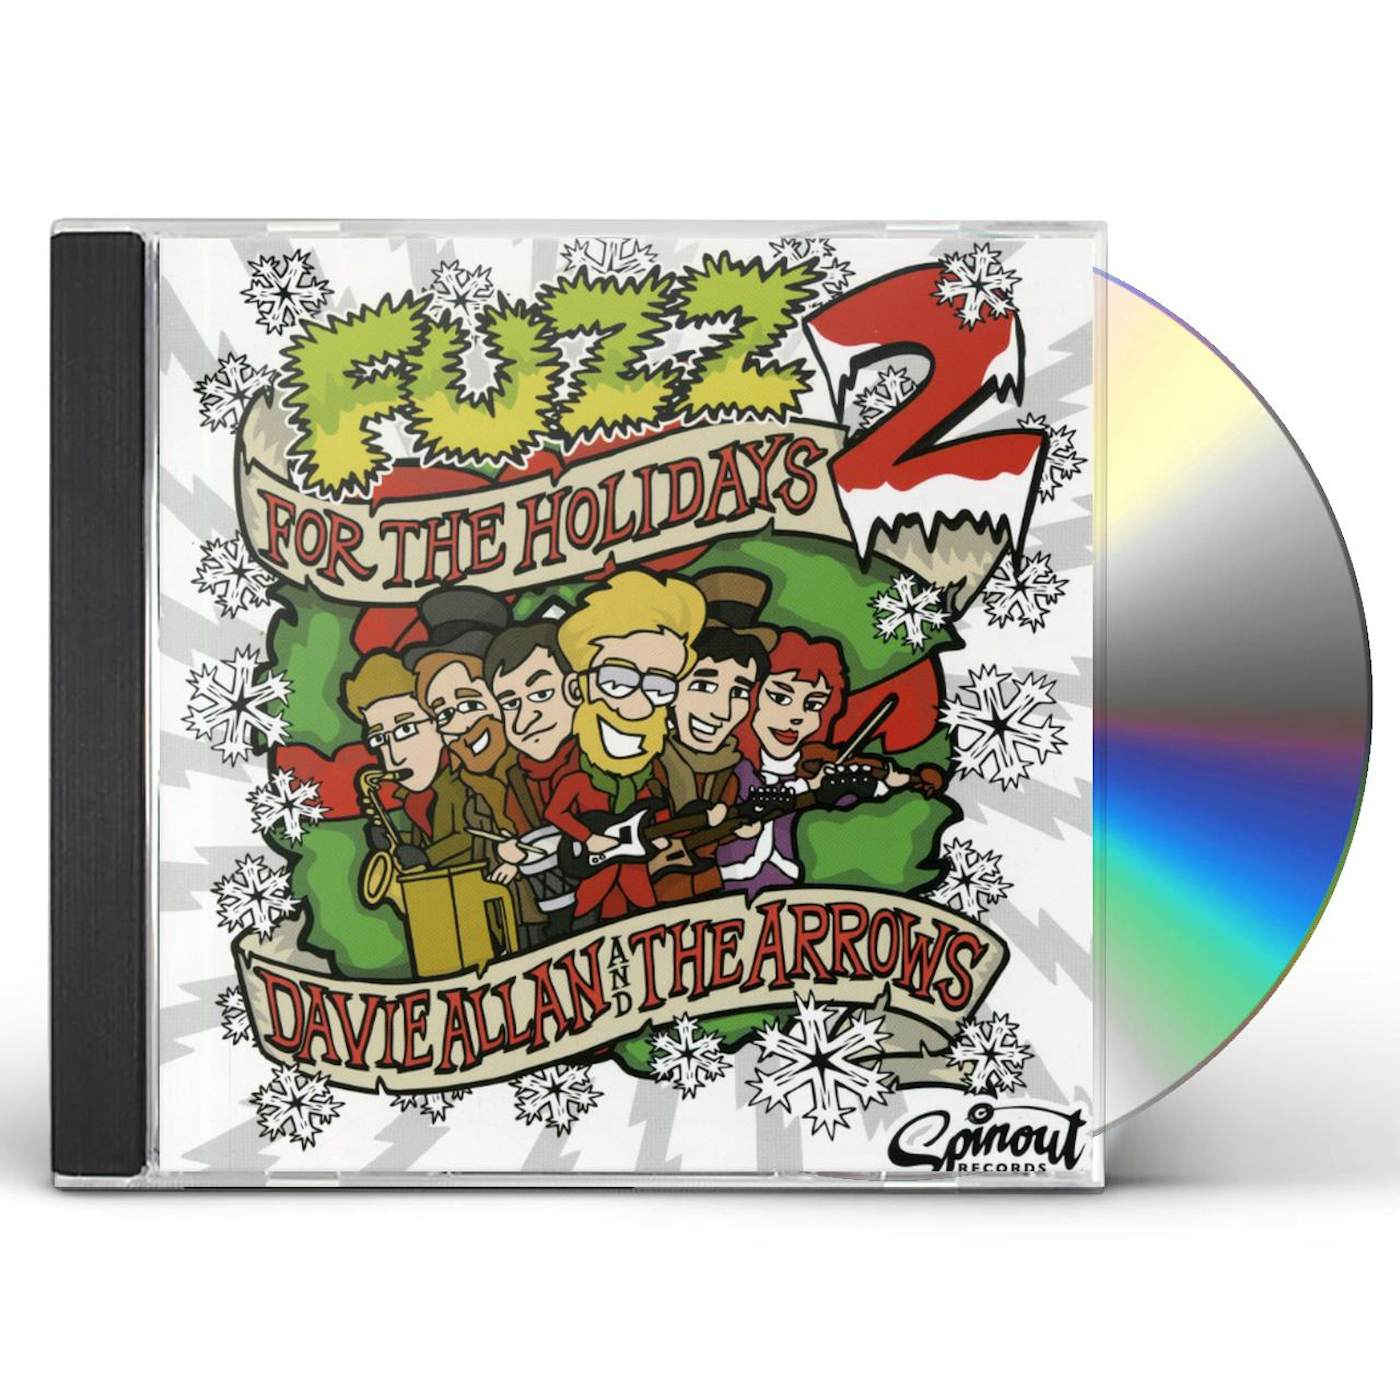 Davie Allan & The Arrows FUZZ FOR THE HOLIDAYS 2 CD